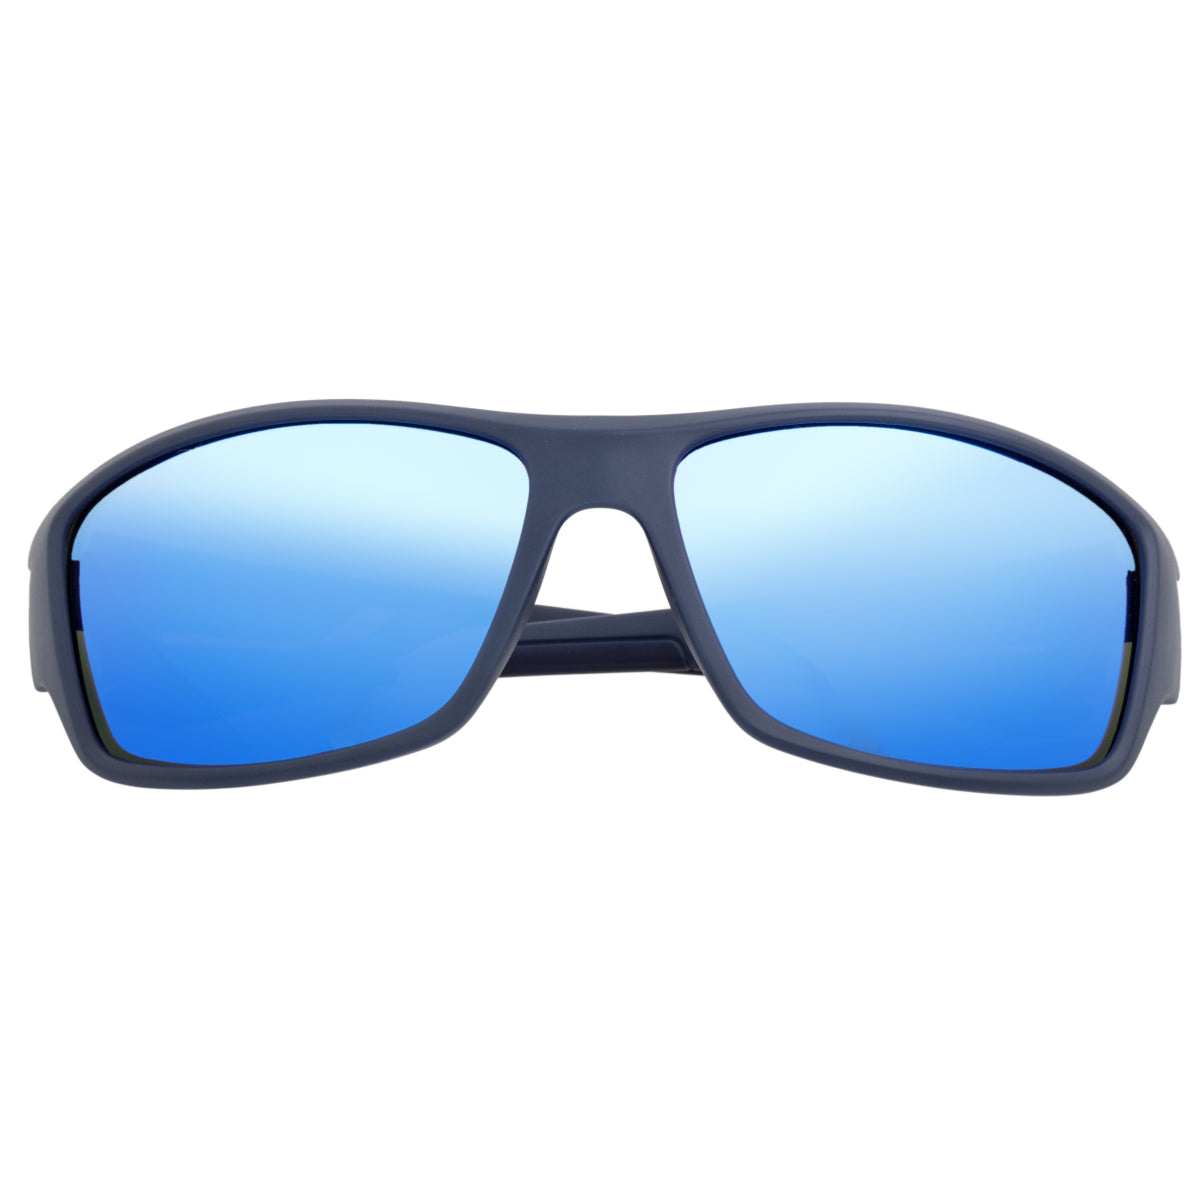 Breed Aquarius Polarized Sunglasses - Navy/Blue - BSG060BL